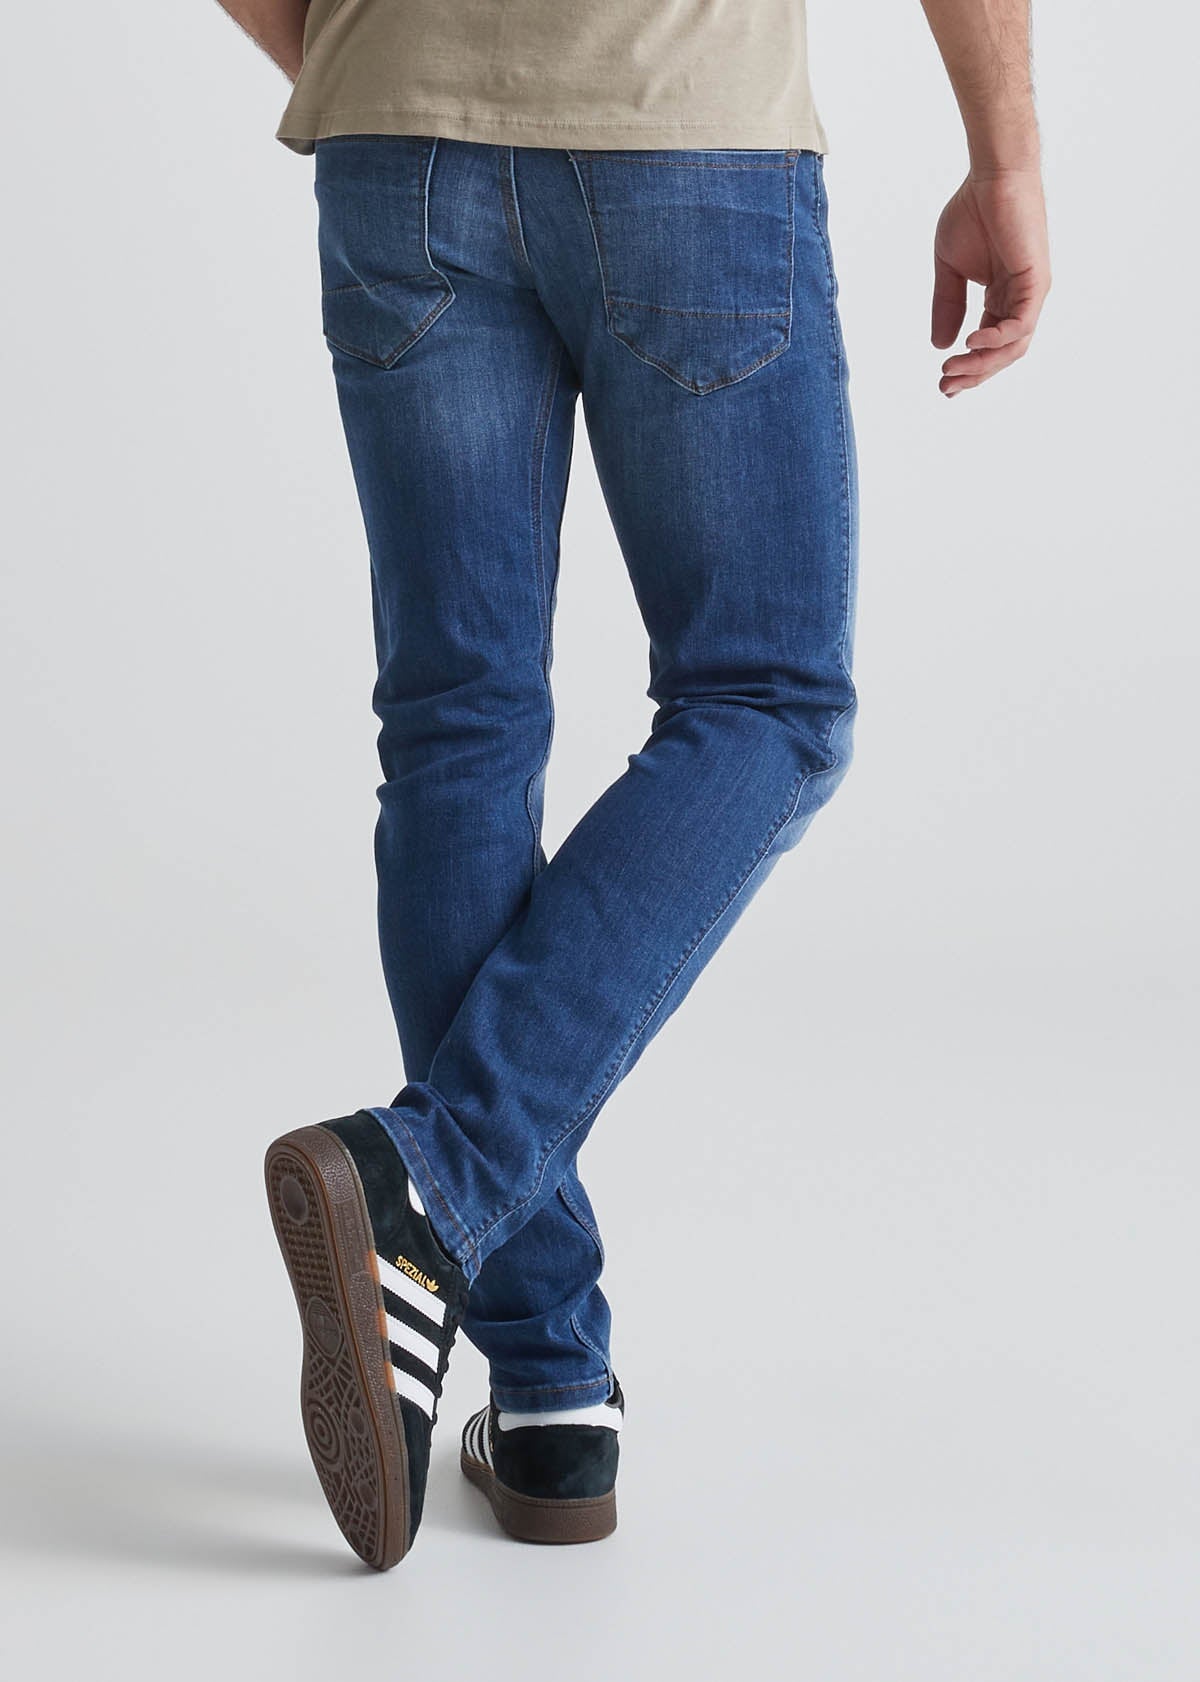 GAP Men's Soft Wear Stretch Slim Fit Denim Jeans, Medium Indigo